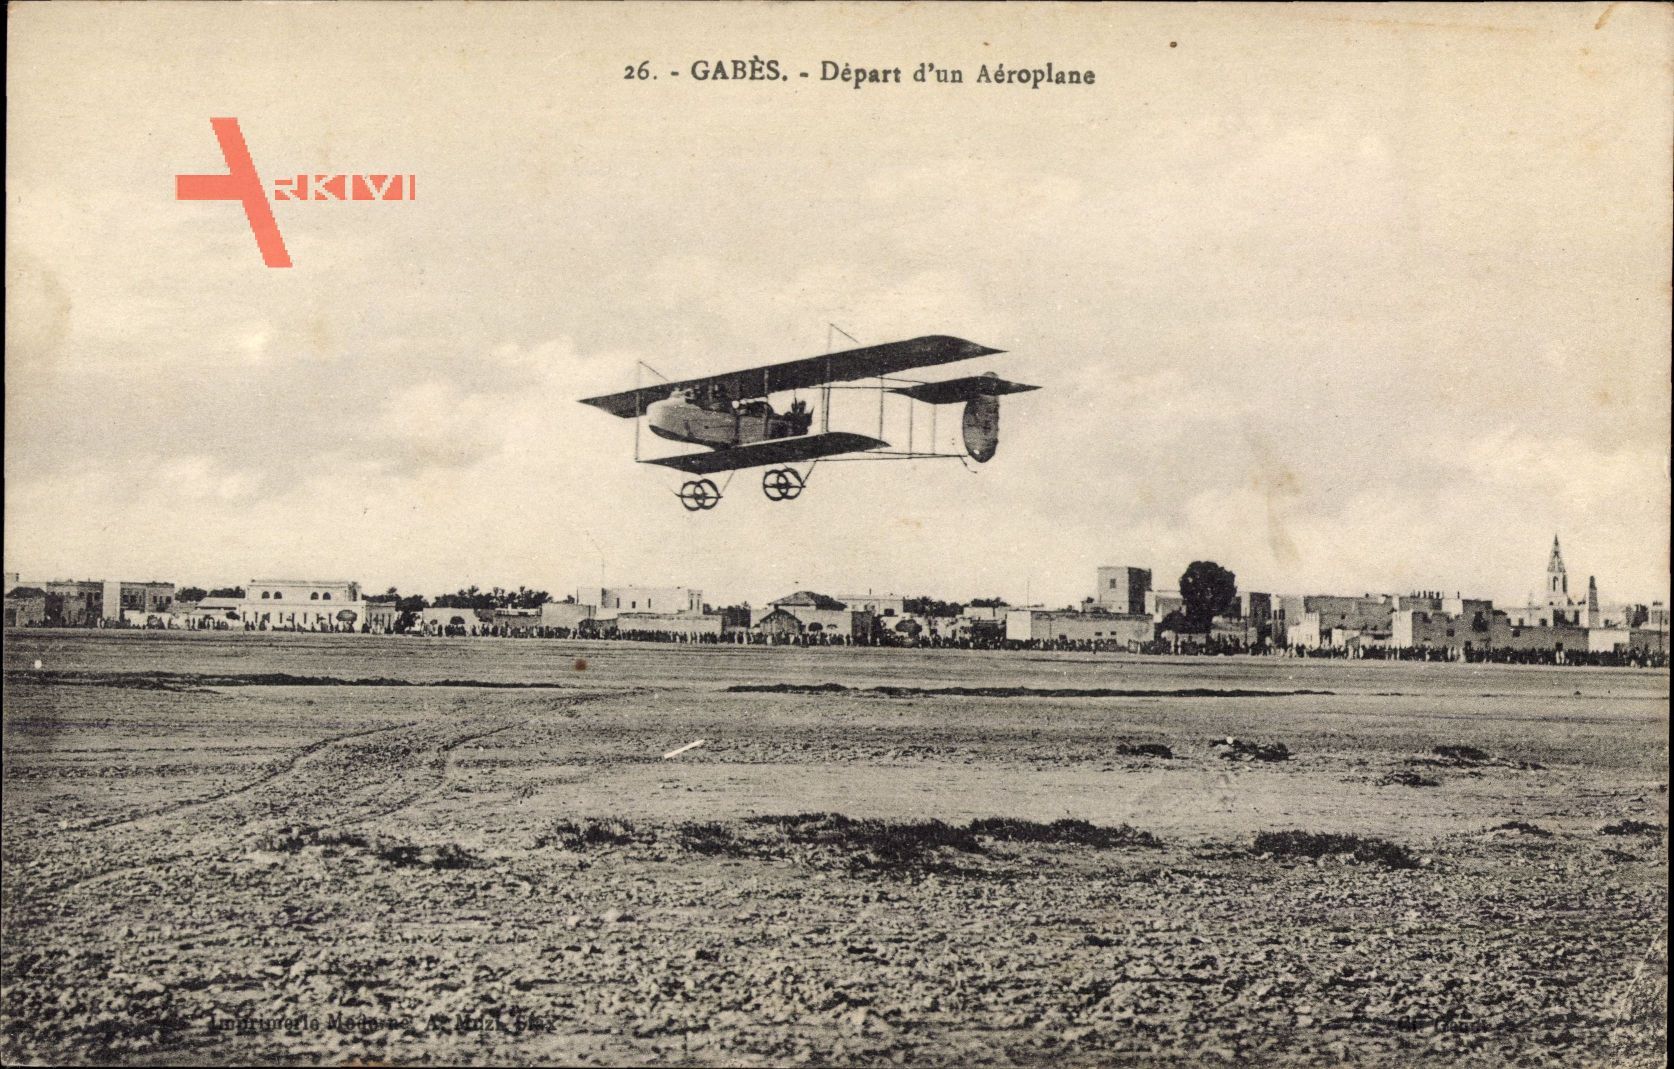 Gabès Tunesien, Depart d'un Aéroplane, Biplan, Flugzeug